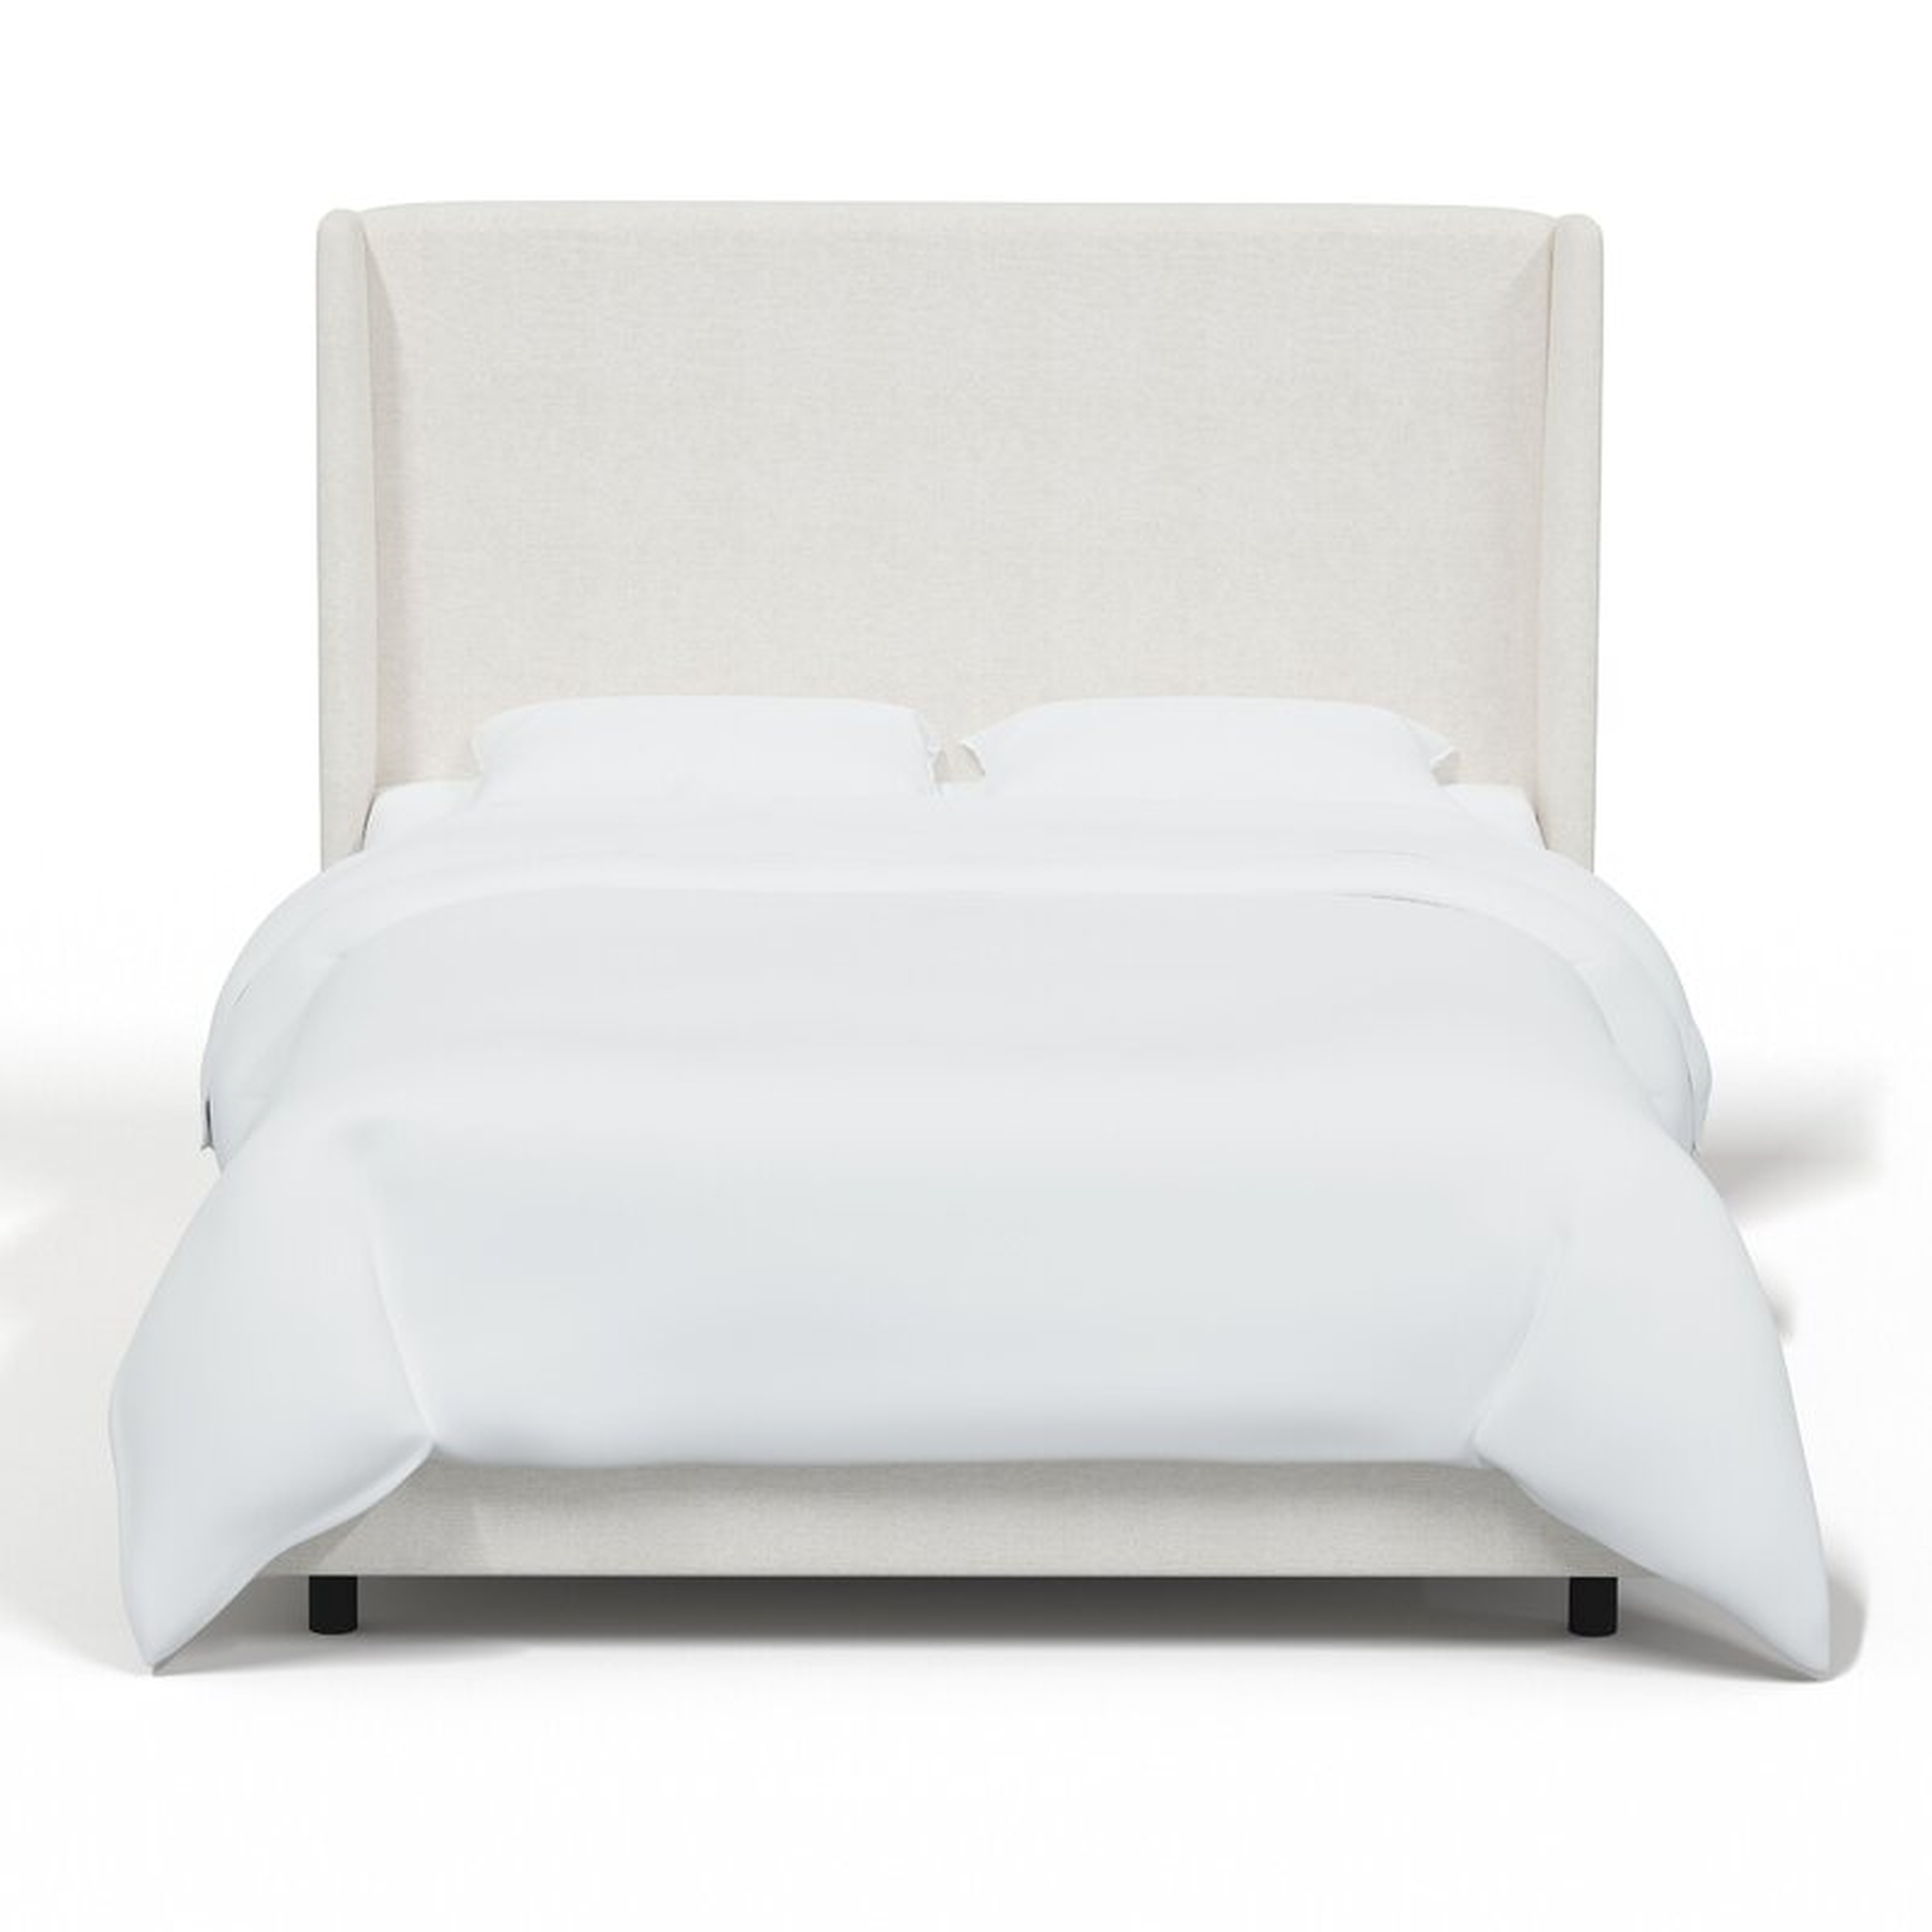 Upholstered Low Profile Standard Bed CAL KING - Wayfair